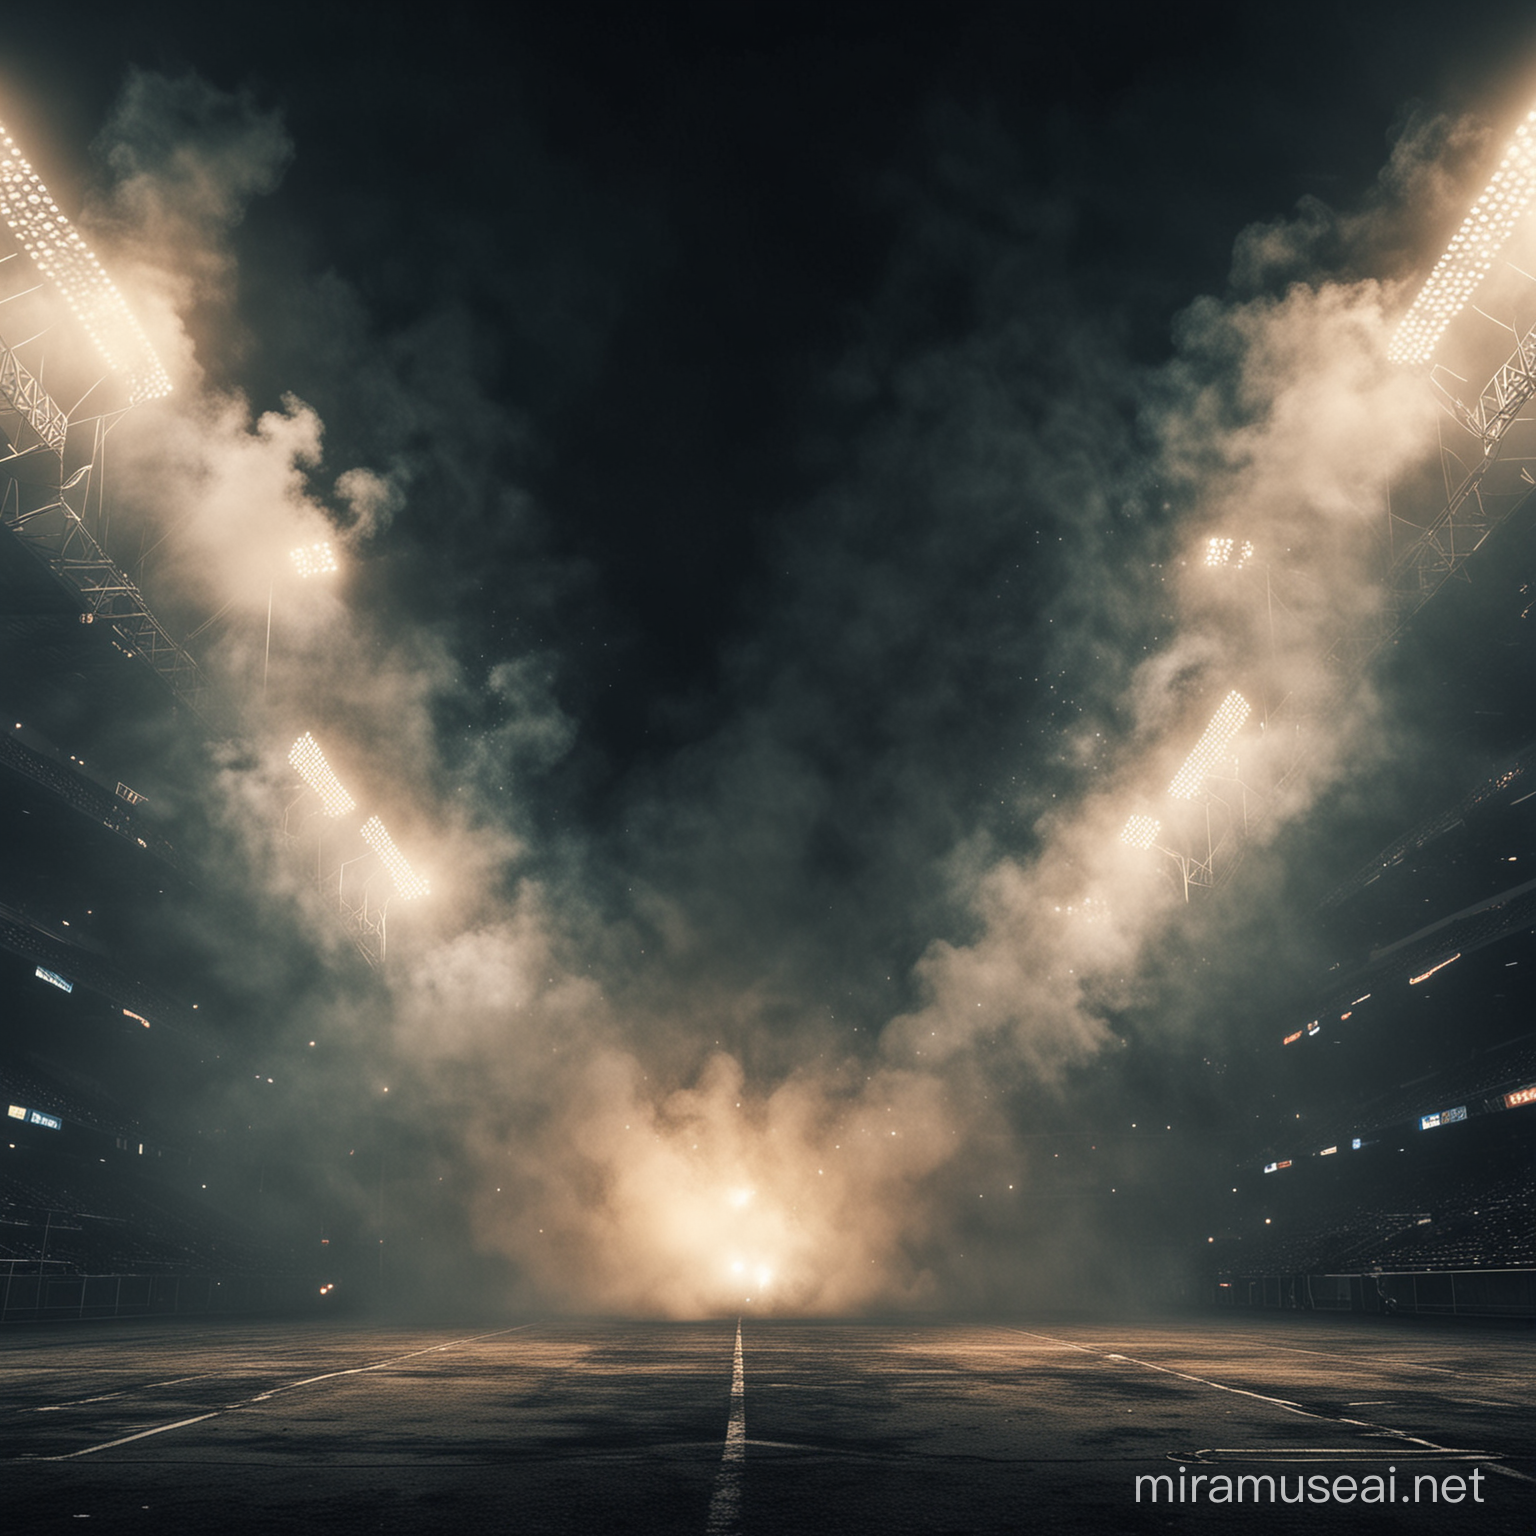 Epic Dark Stadium Scene with Smoky Ambiance